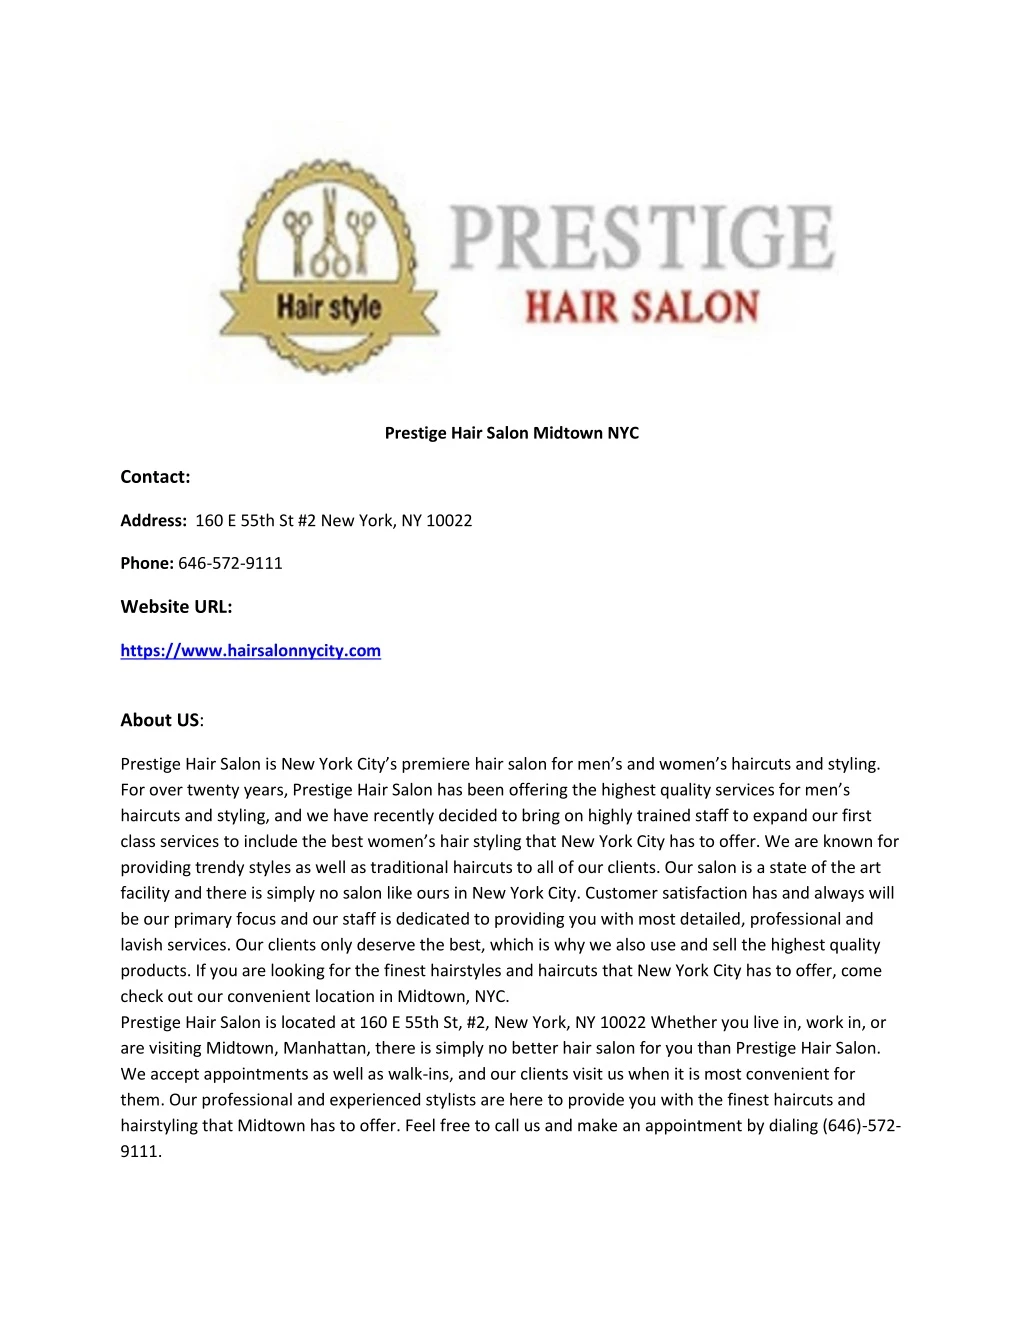 prestige hair salon midtown nyc